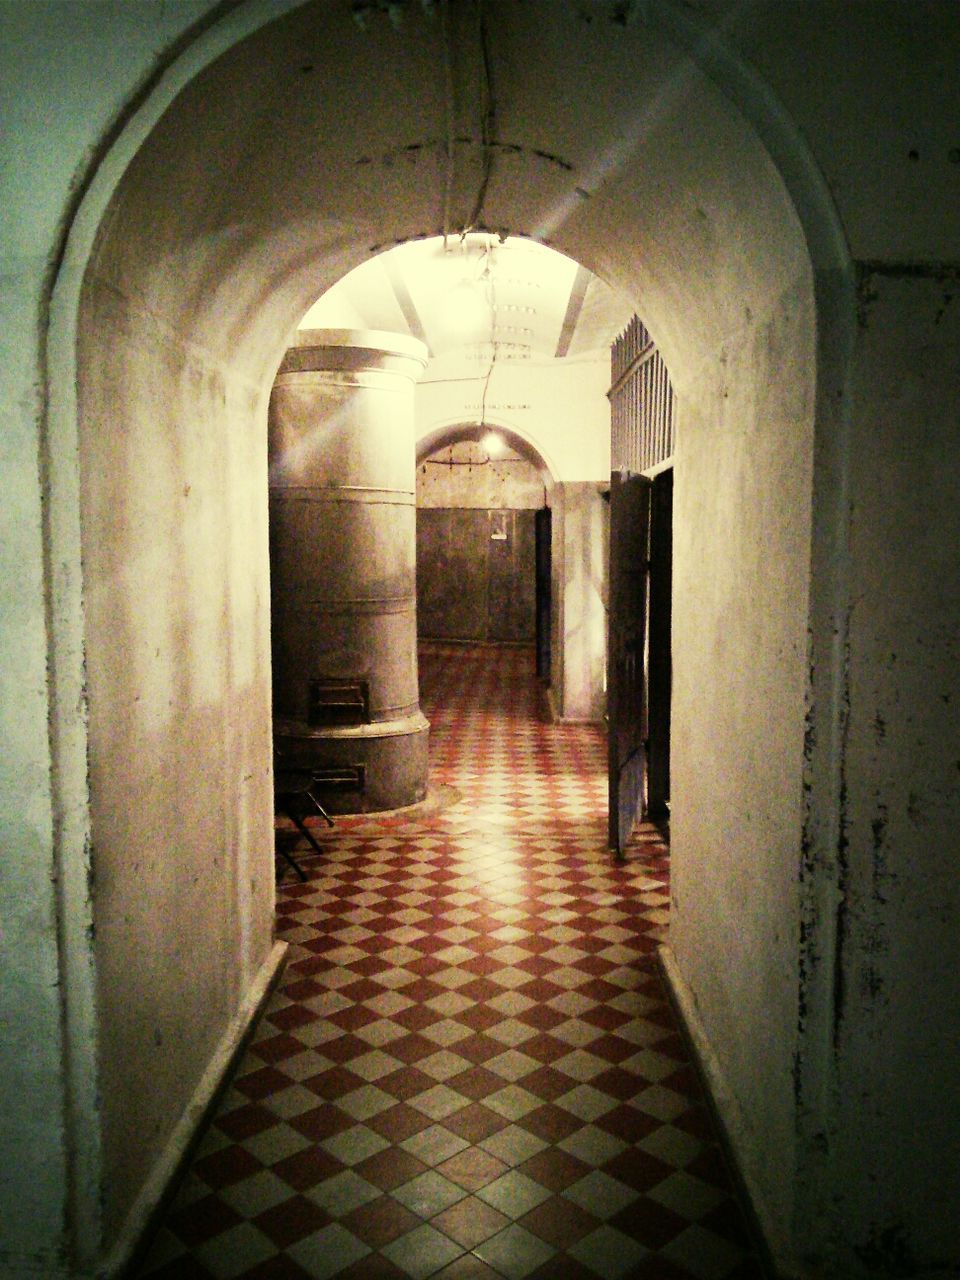 Corridor inside prison